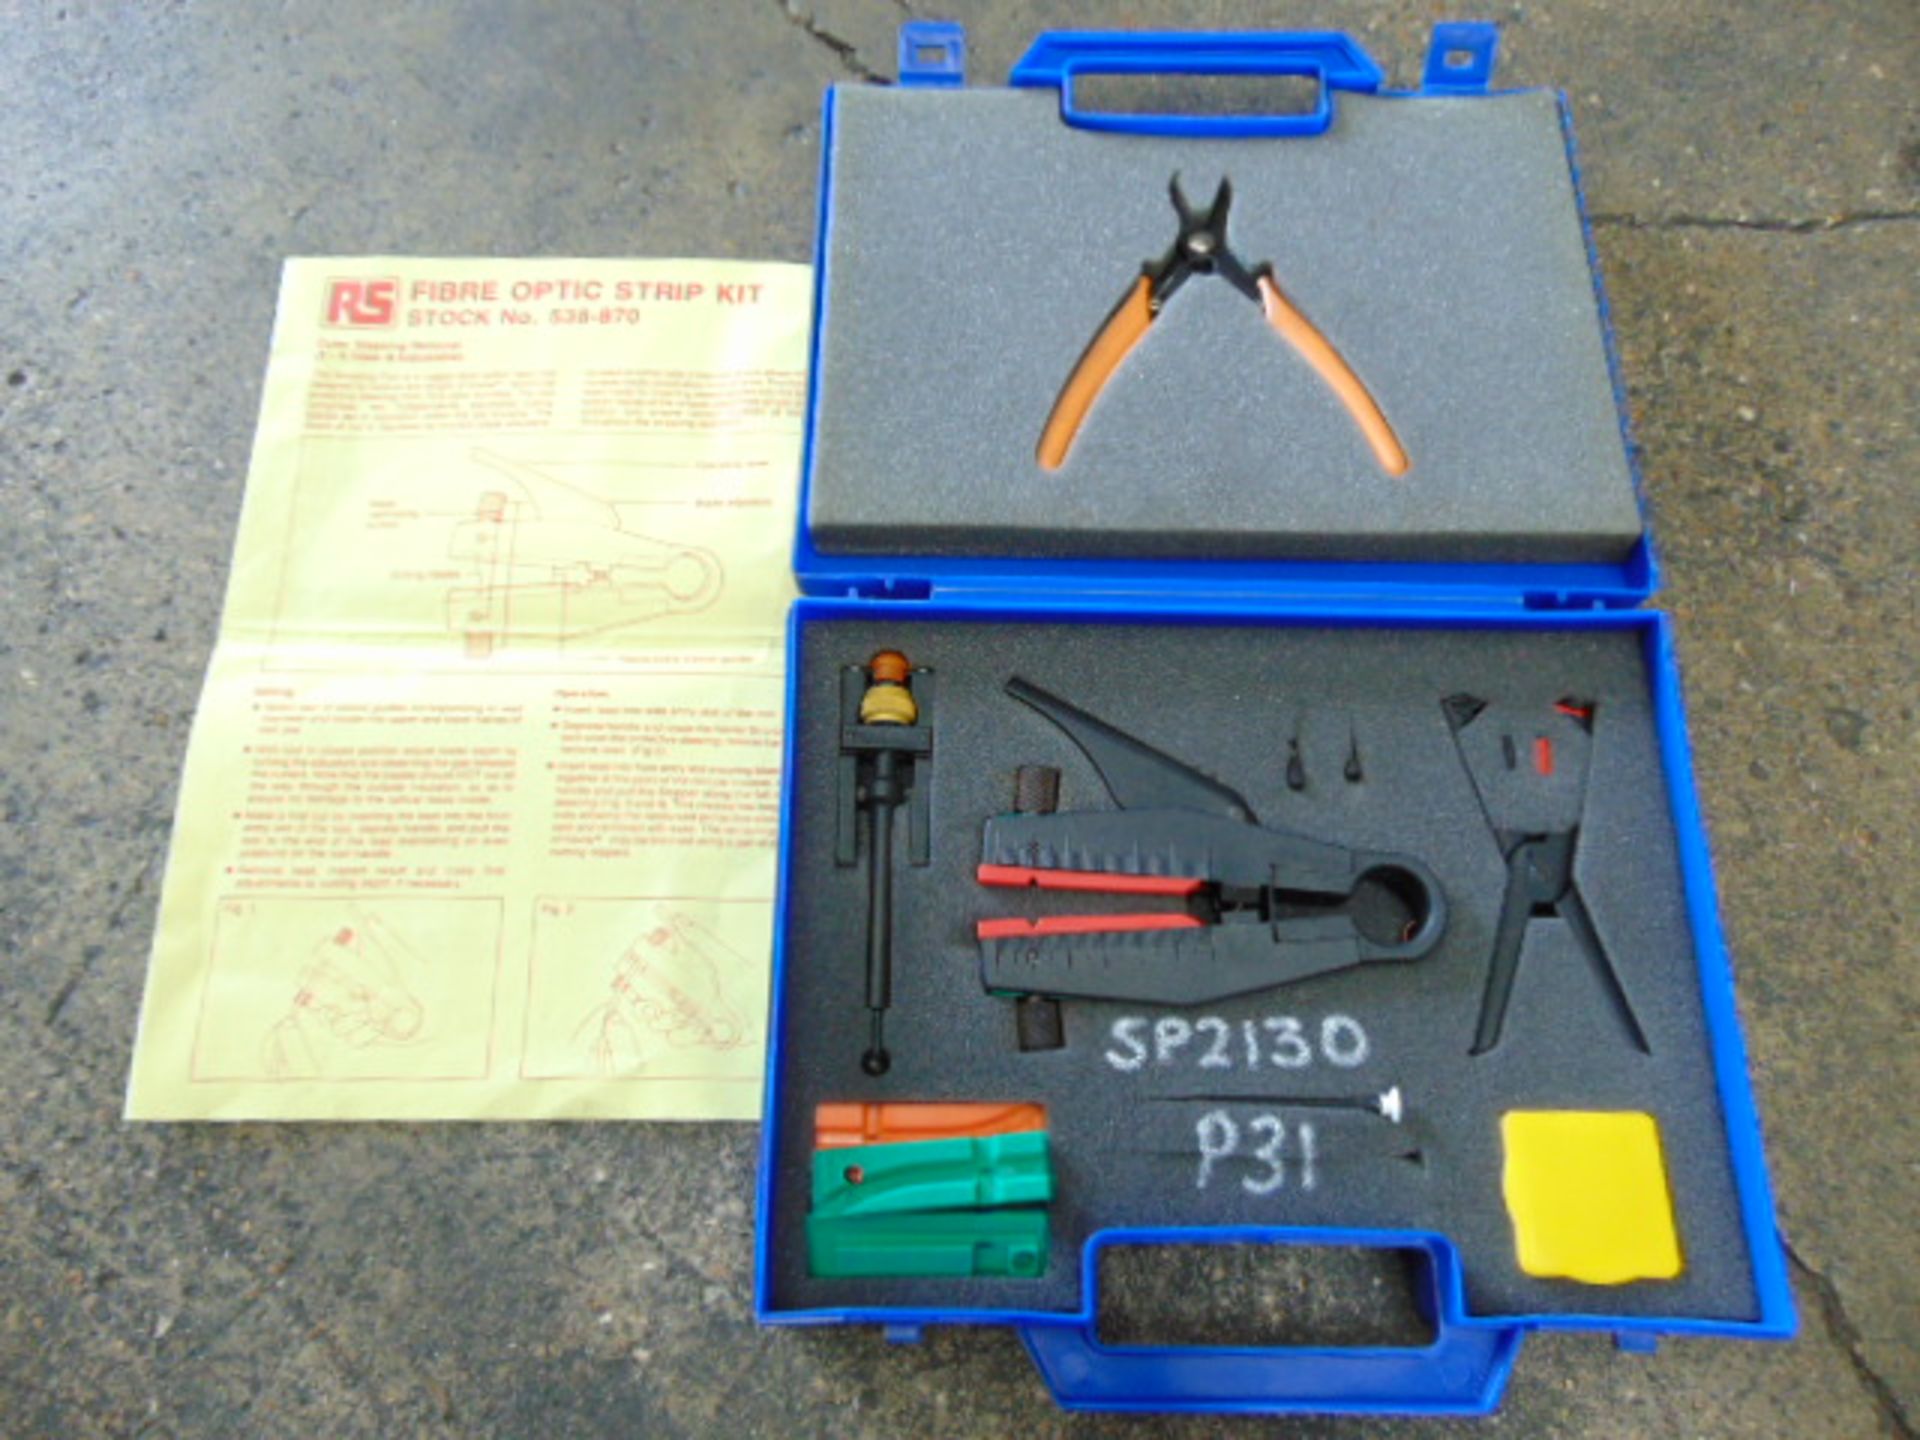 RS Components Fibre Optic Strip Kit P/No 538-870 complete with Transit Case